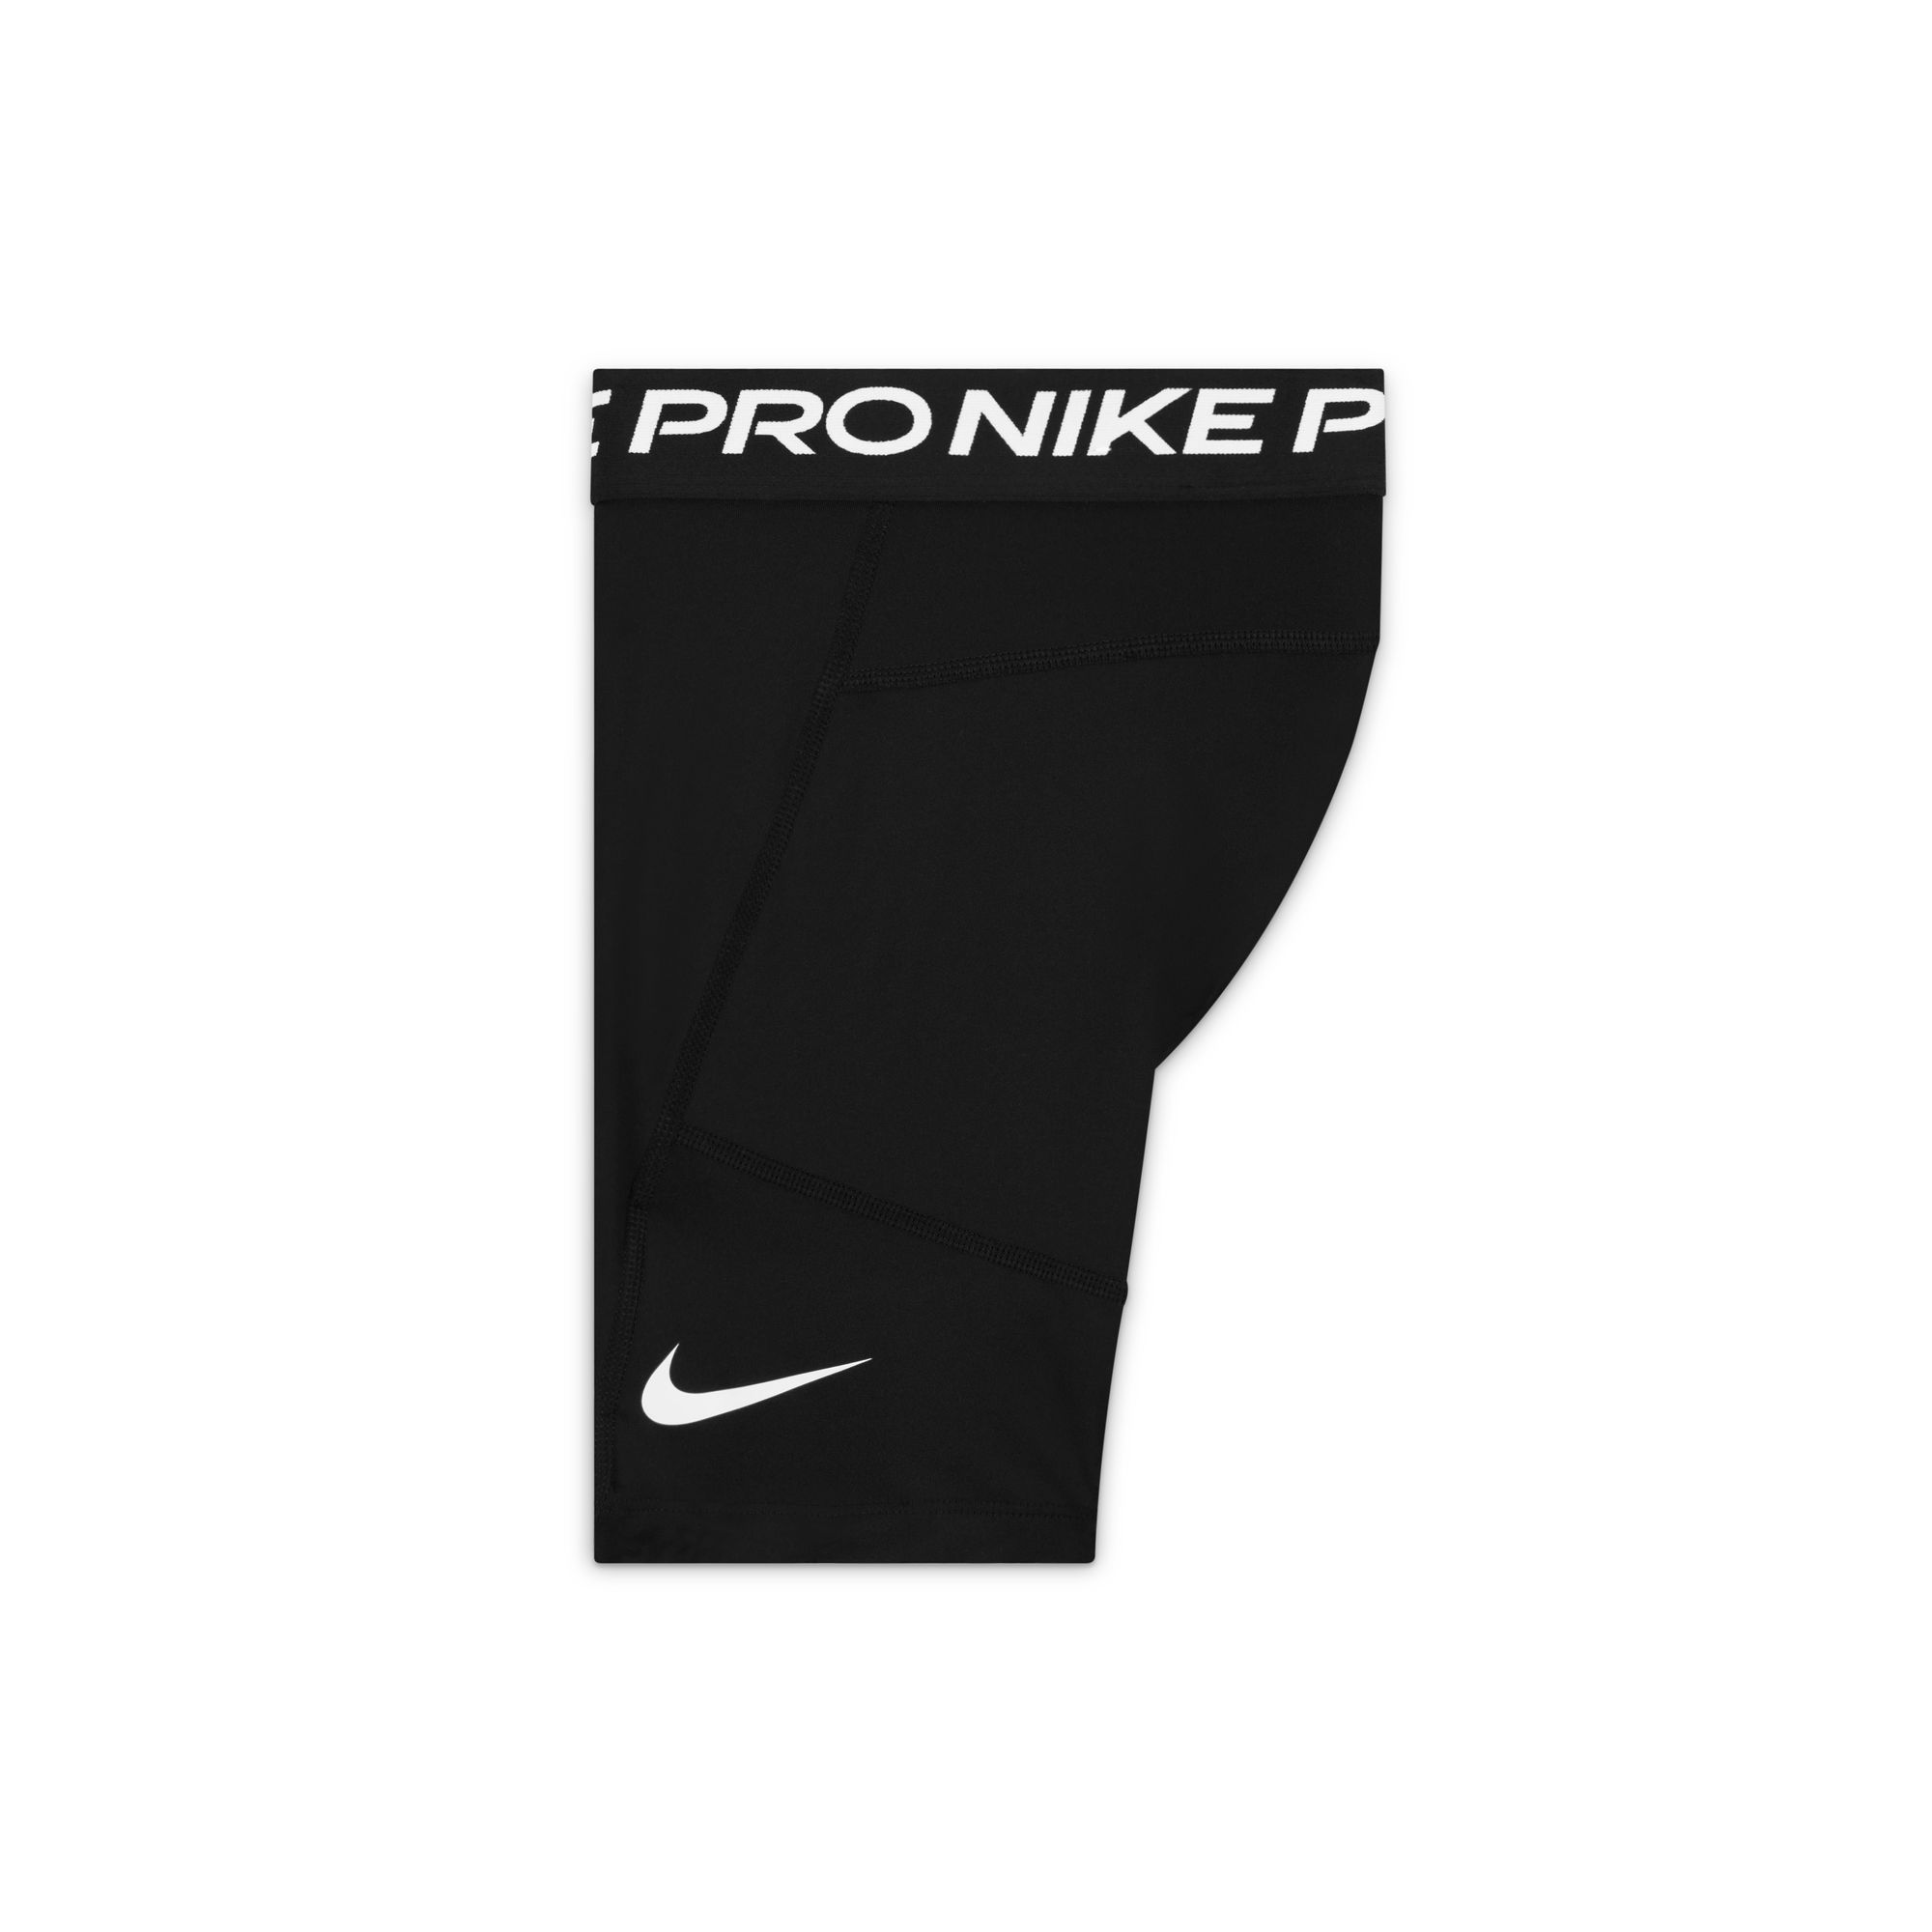 Men's Nike Pro Compression Shorts